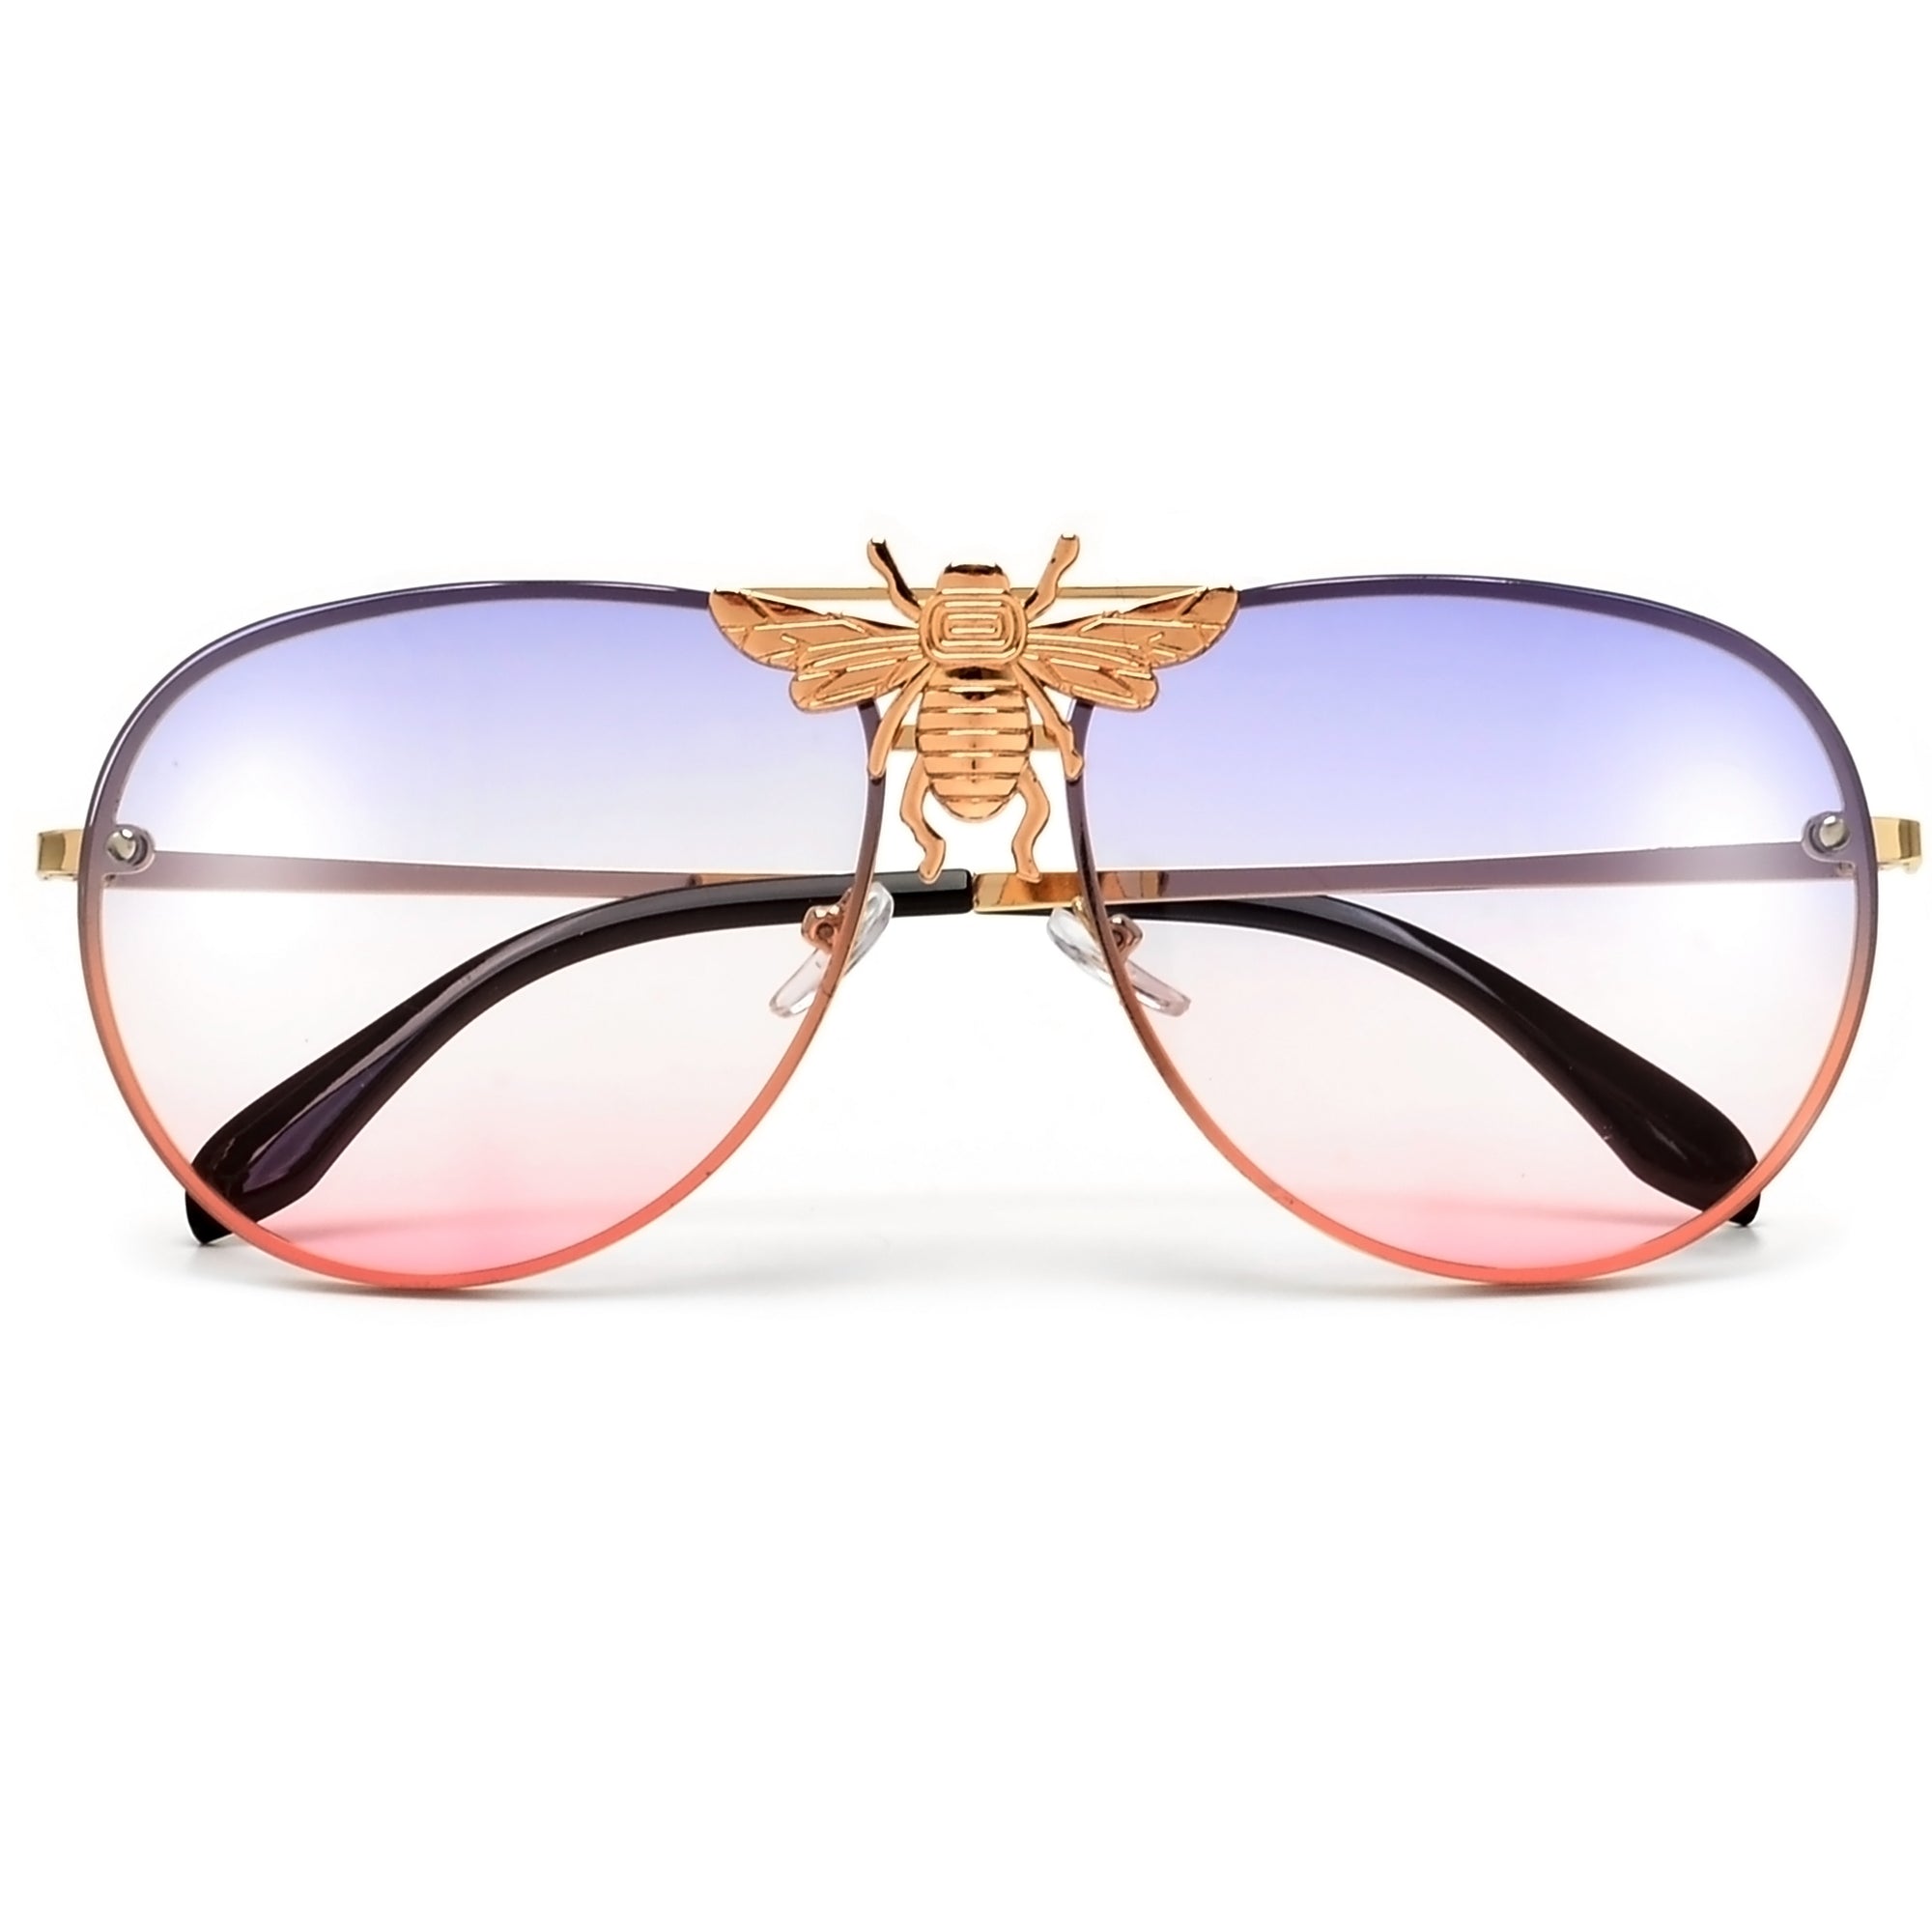 Gucci™ glasses | Sunglasses women oversized, Sunglasses women fashion,  Stylish glasses